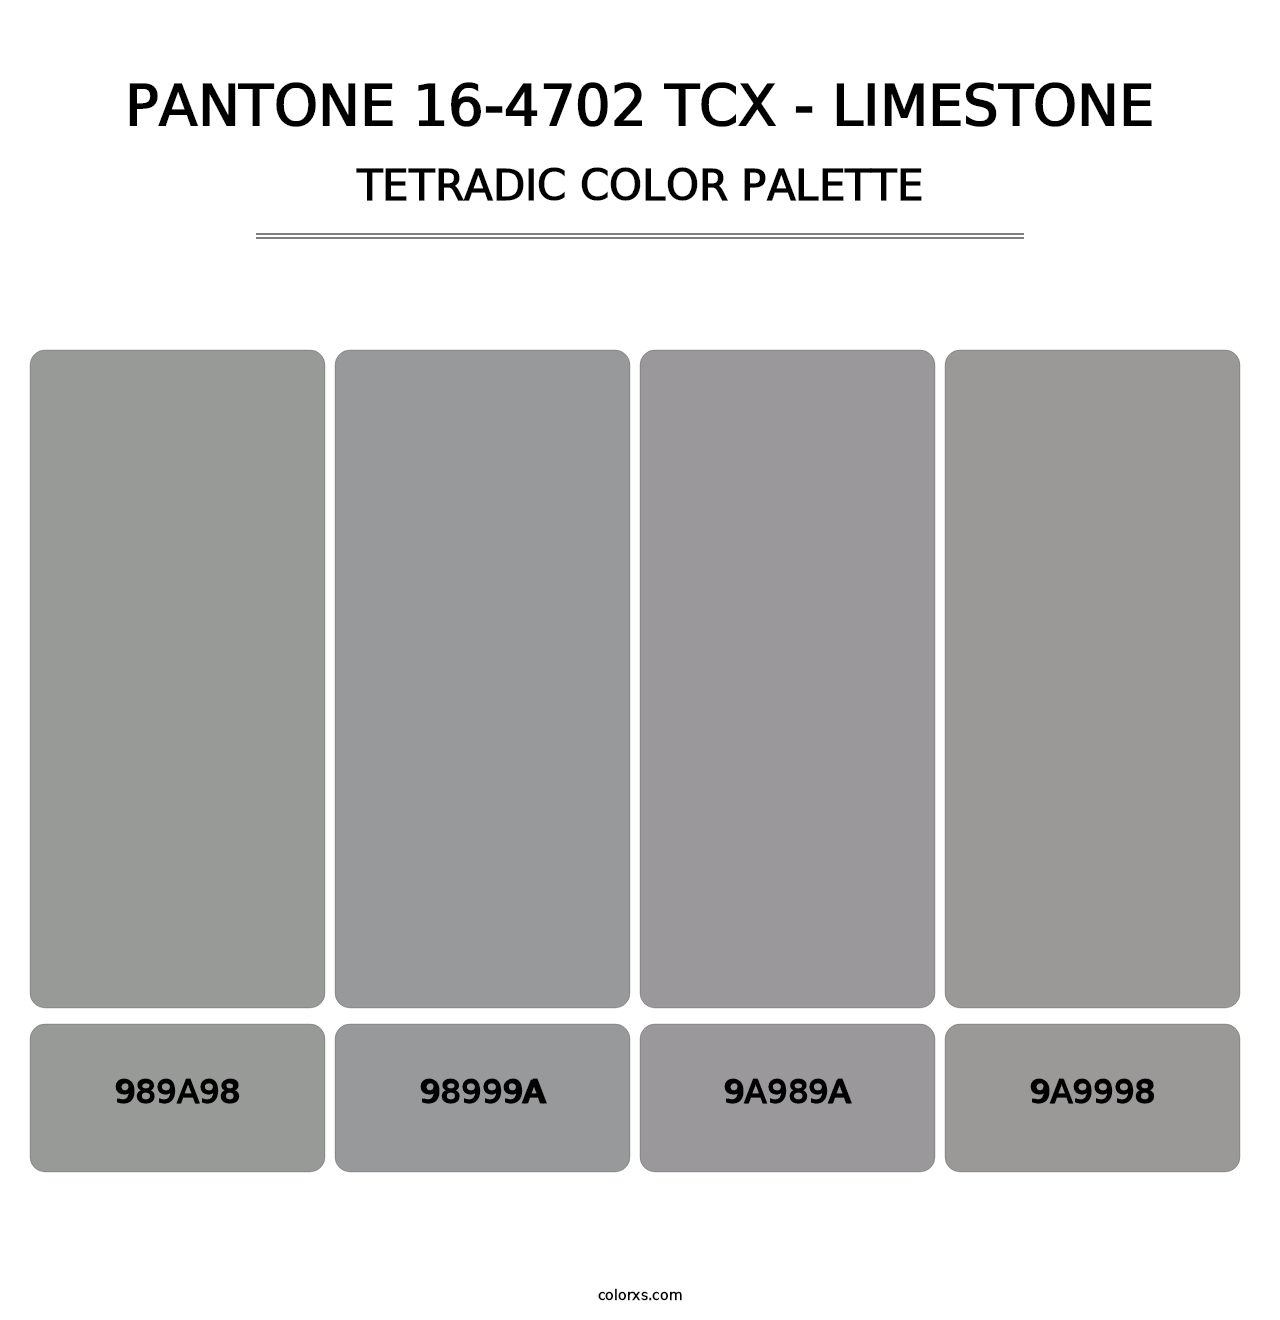 PANTONE 16-4702 TCX - Limestone - Tetradic Color Palette